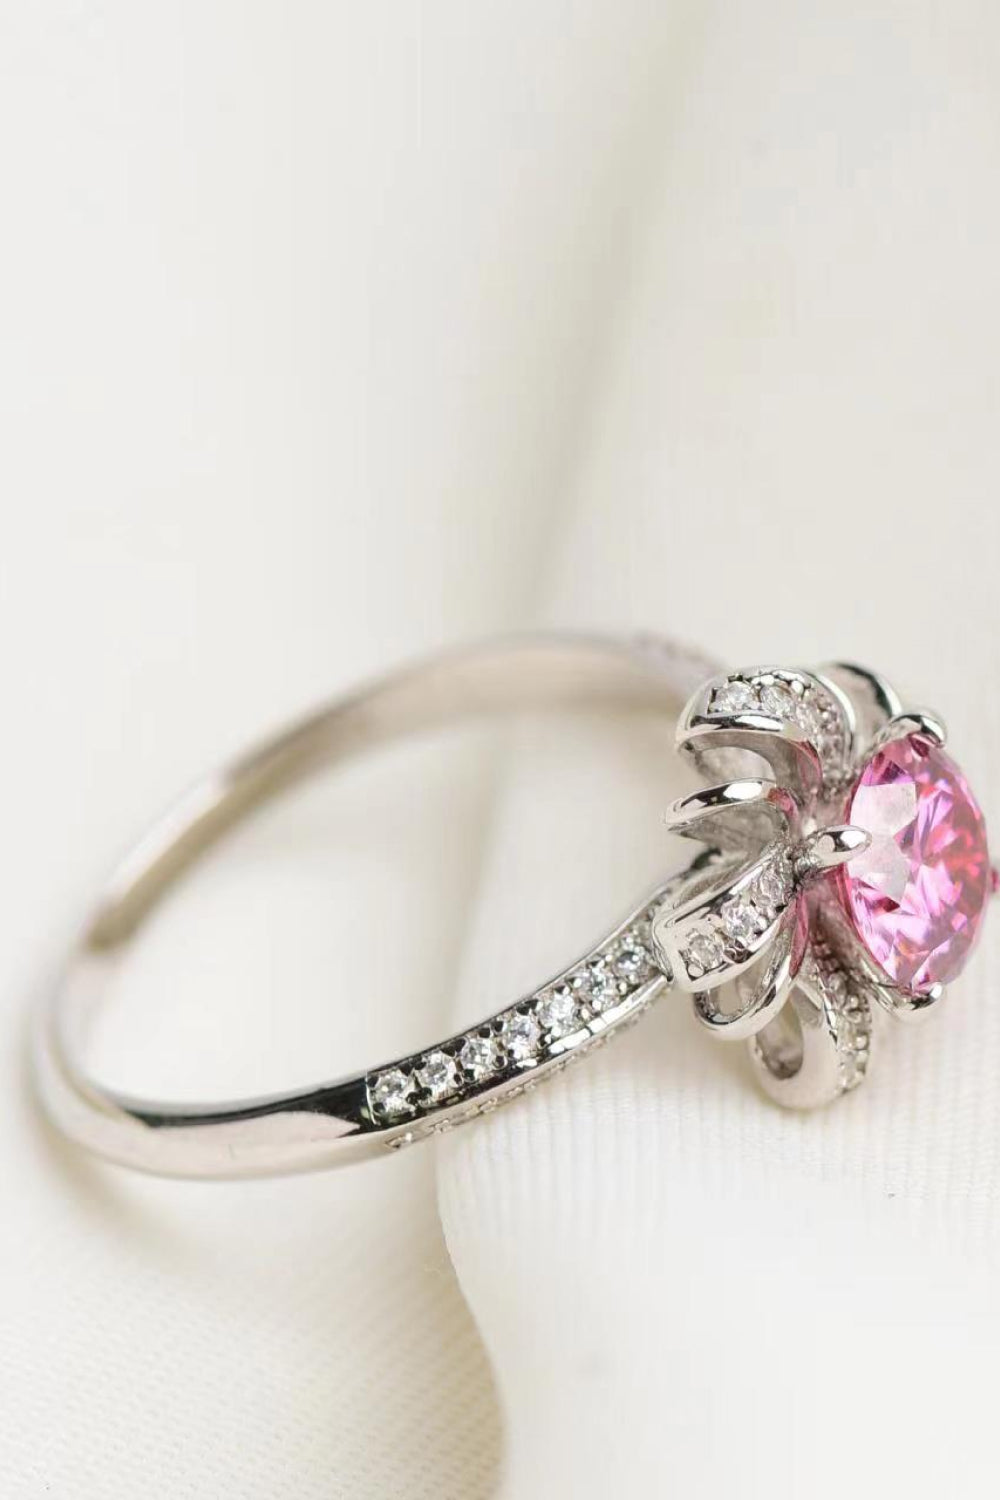 1 Carat Pink Round Brilliant Cut Moissanite Flower-Shaped Ring - Sparkala